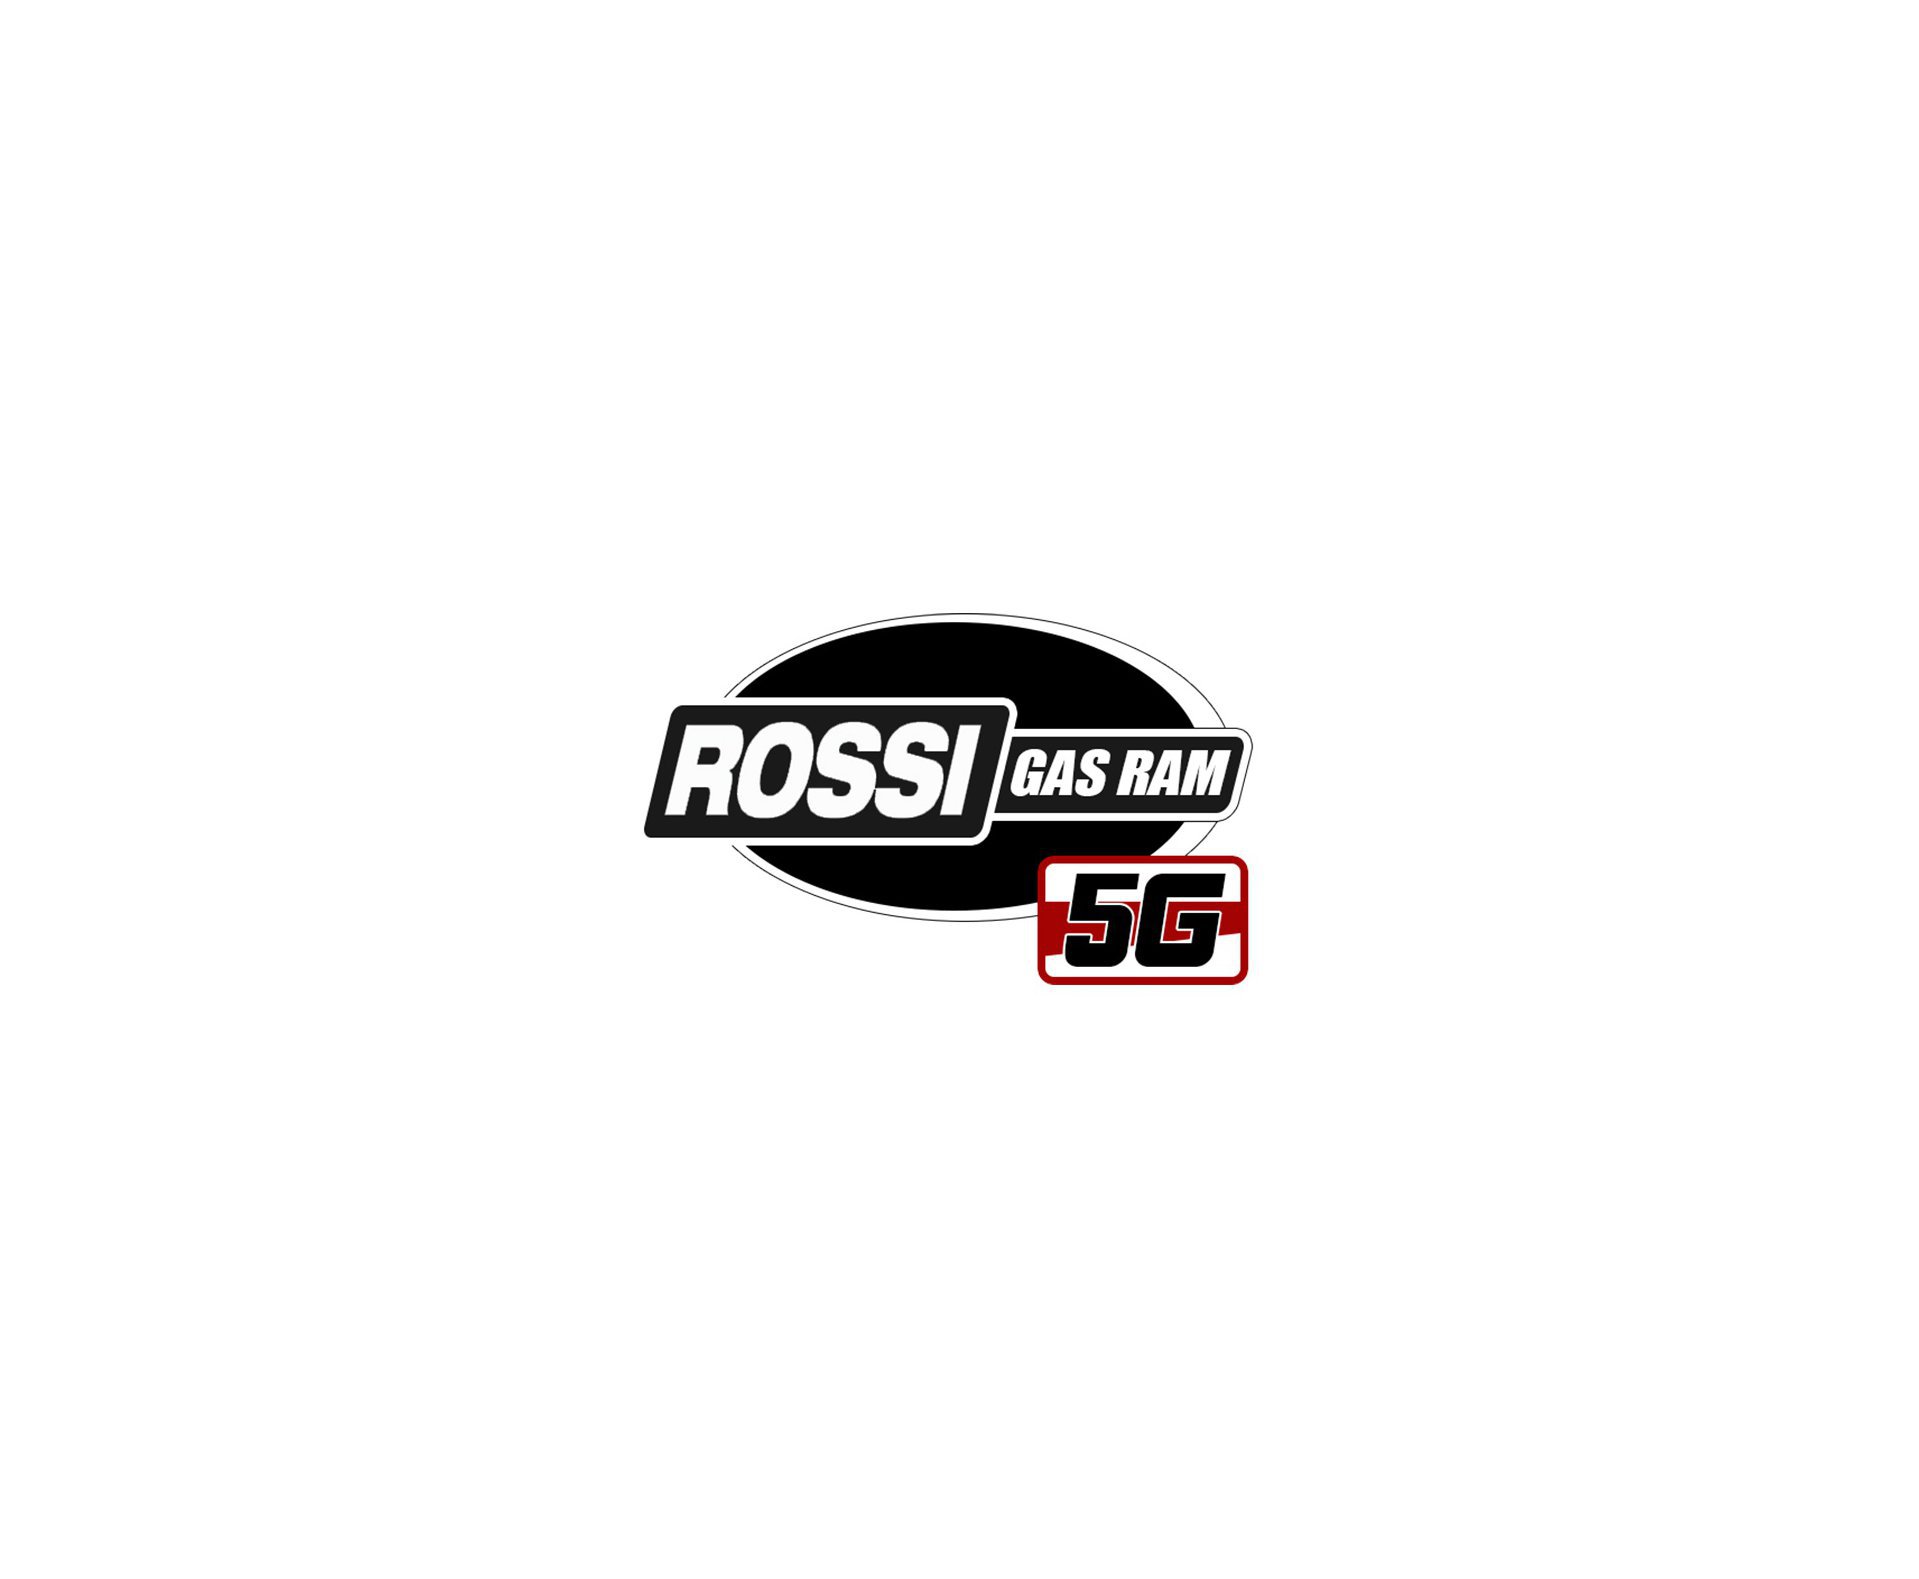 Carabina de Pressão Rossi Dione 5G Gás Ram 60kg 5,5mm